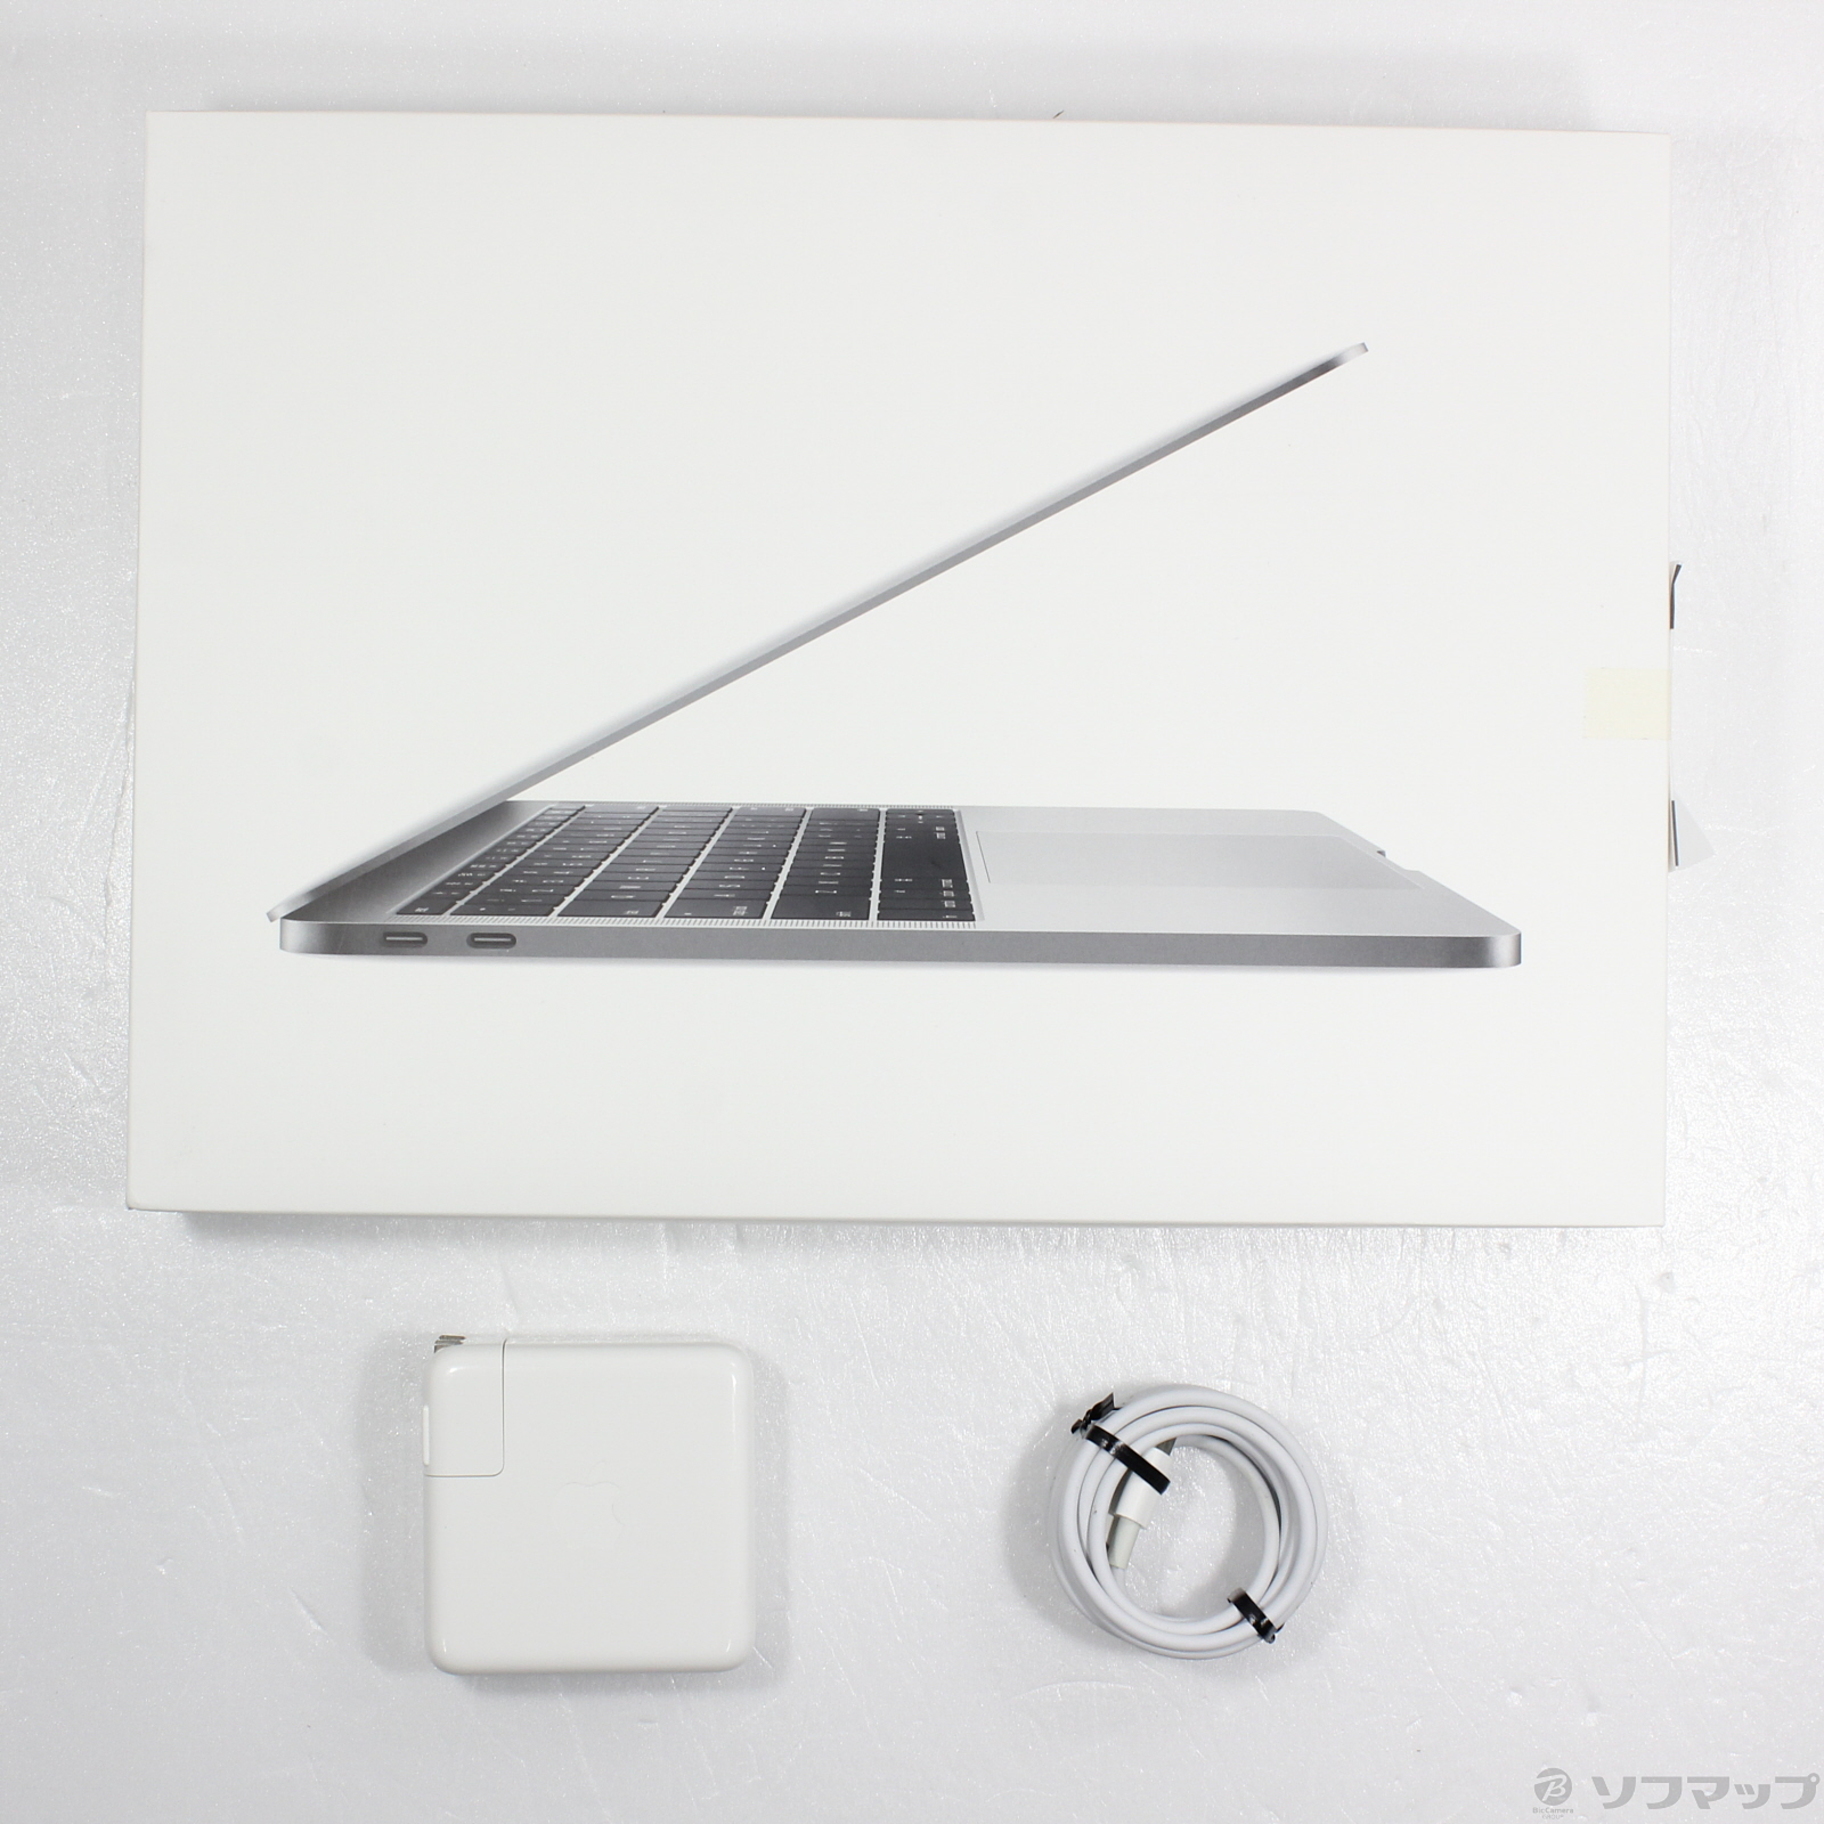 中古品〕 MacBook Pro 13.3-inch Late 2016 MLL42J／A Core_i5 2GHz ...